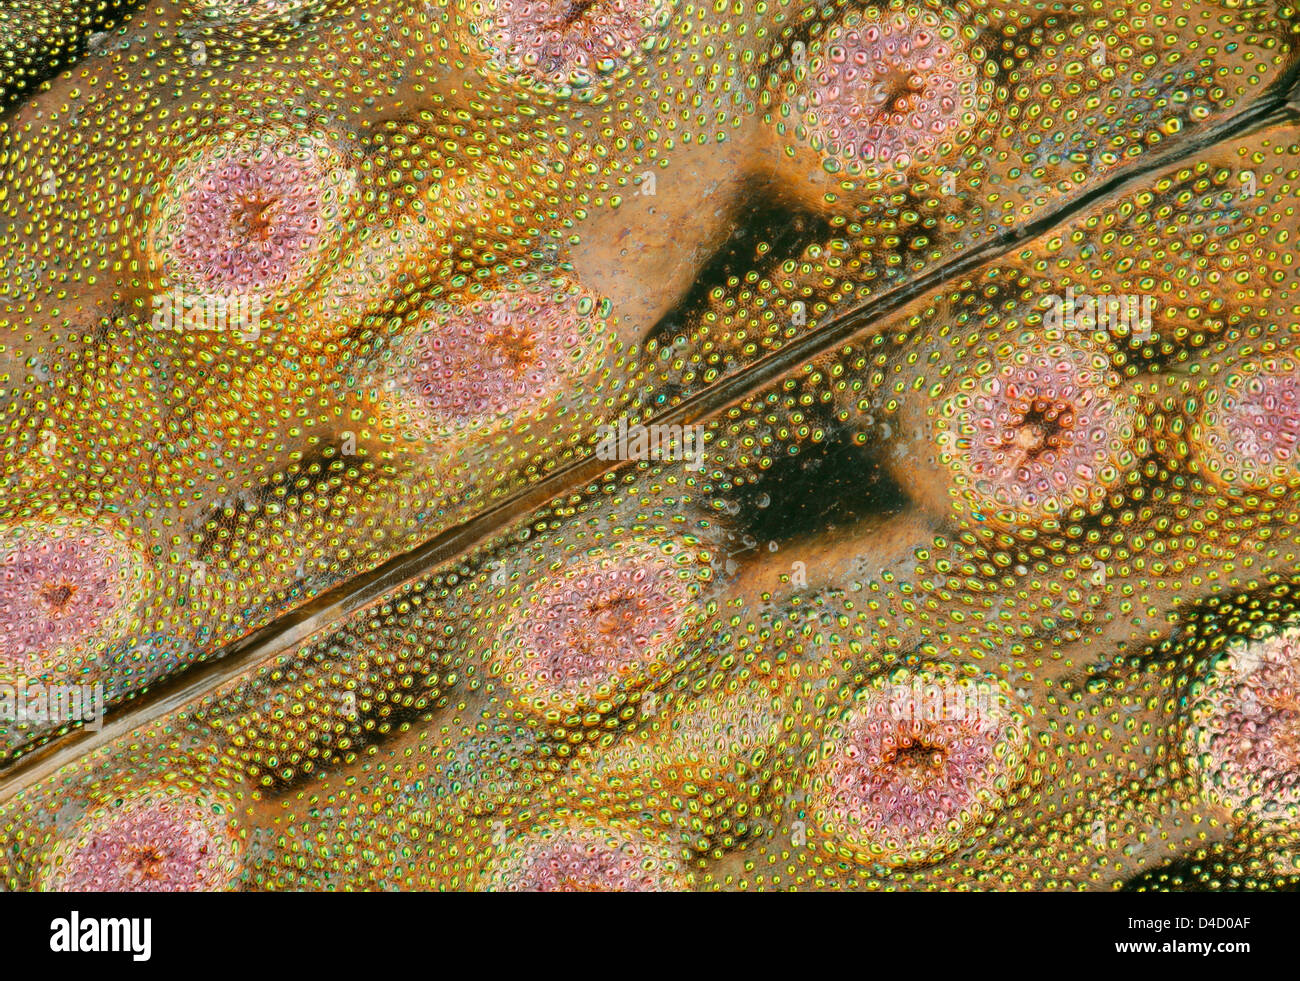 Ï¿½itros de un escarabajo de tierra Elaphrus, extreme close-up Foto de stock